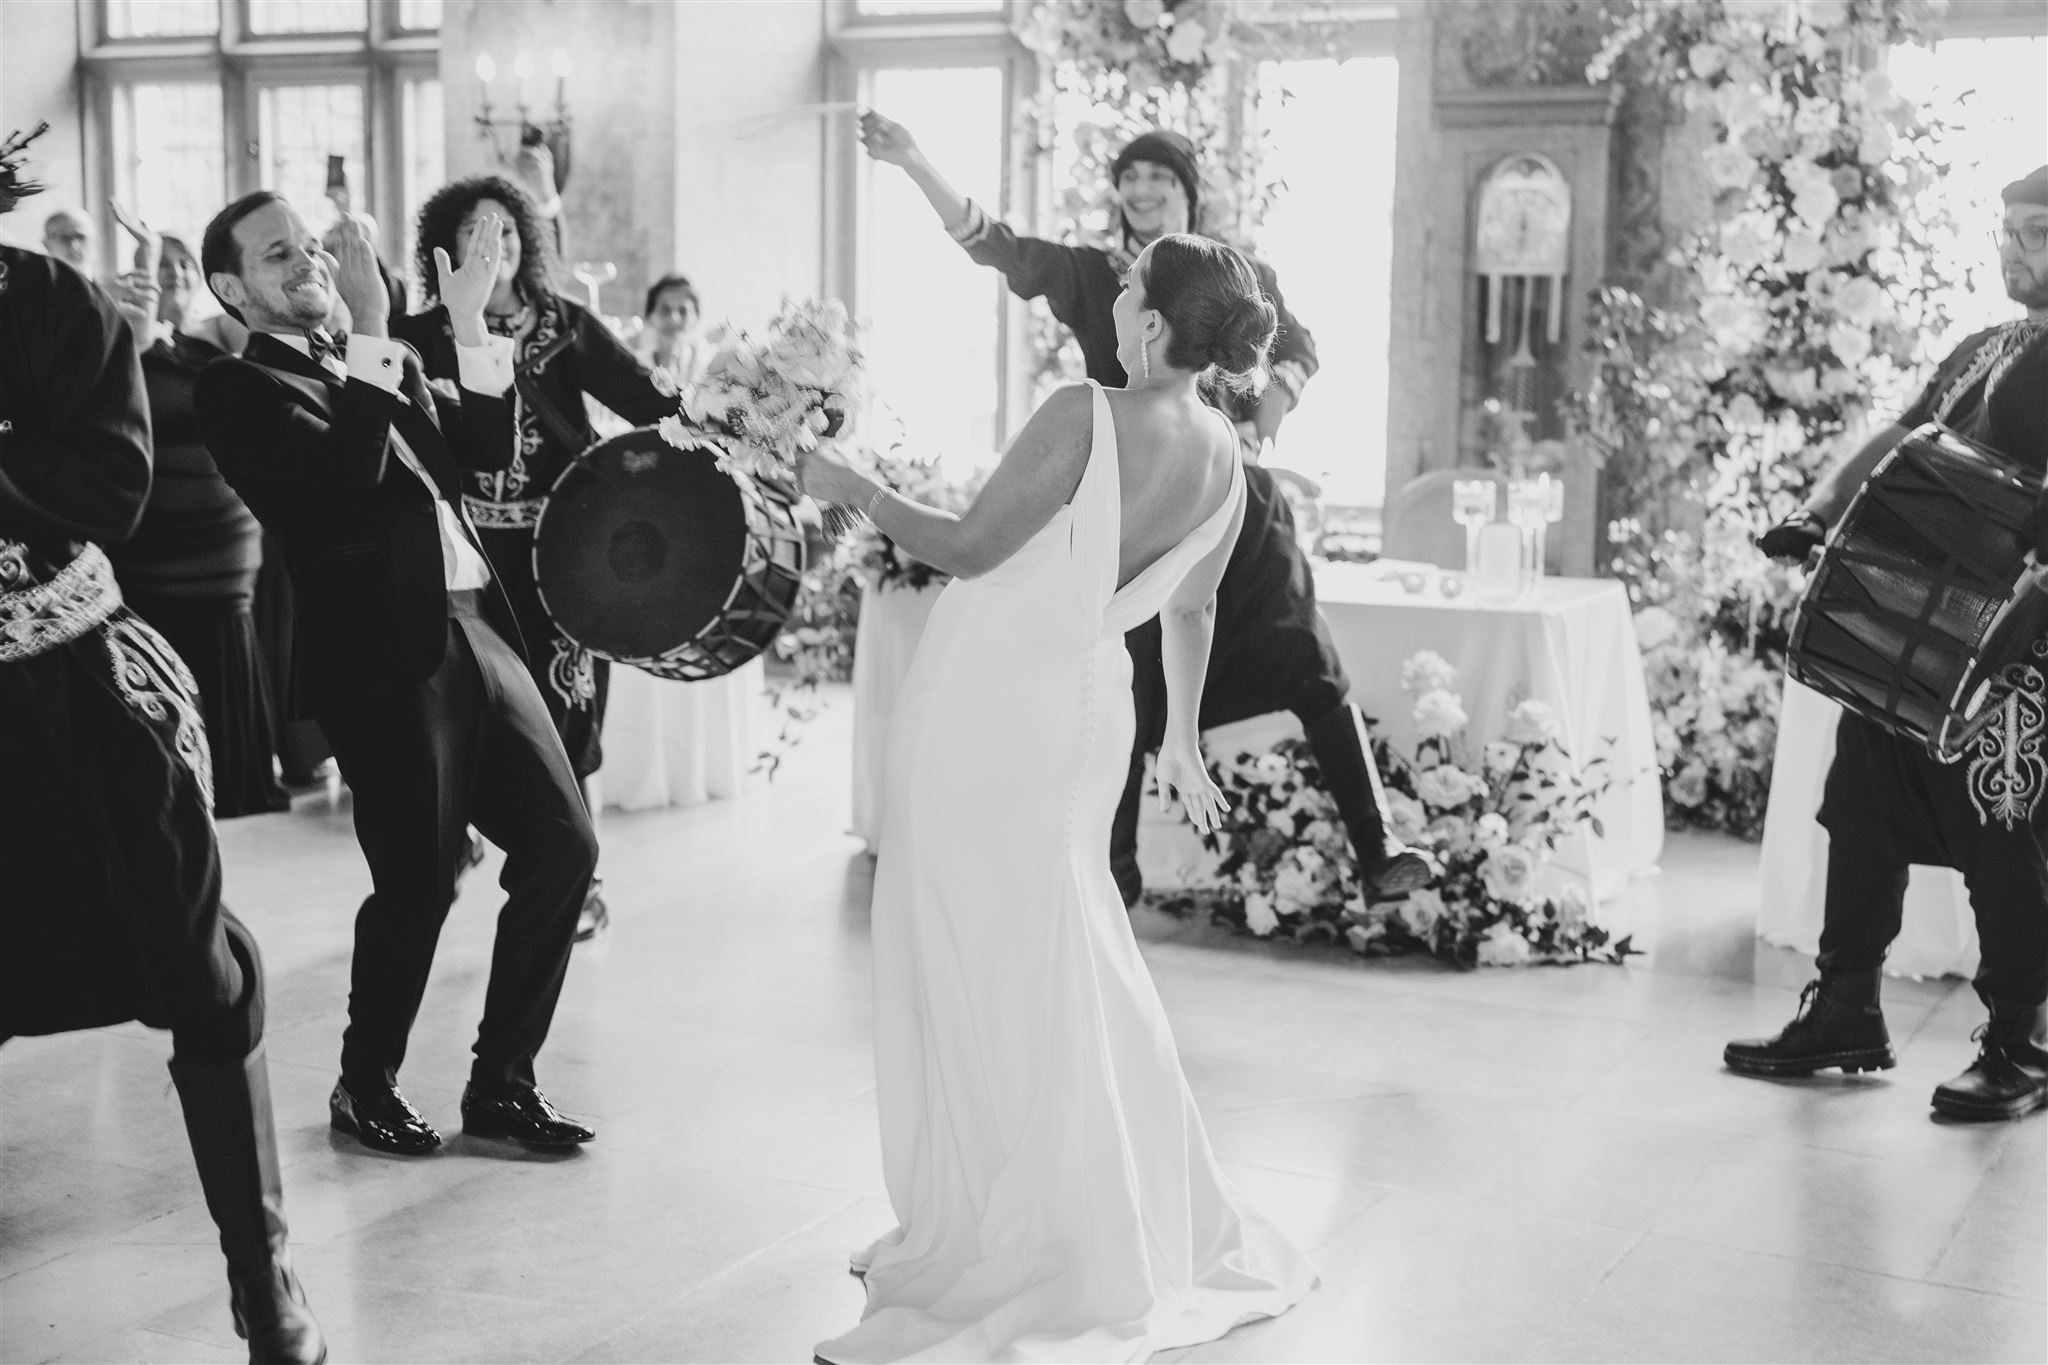 mt. stephen's hall wedding reception, floral arch, flower artistry centrepieces, wedding flower design, luxury reception banff springs, zaffe dance, lebanese wedding